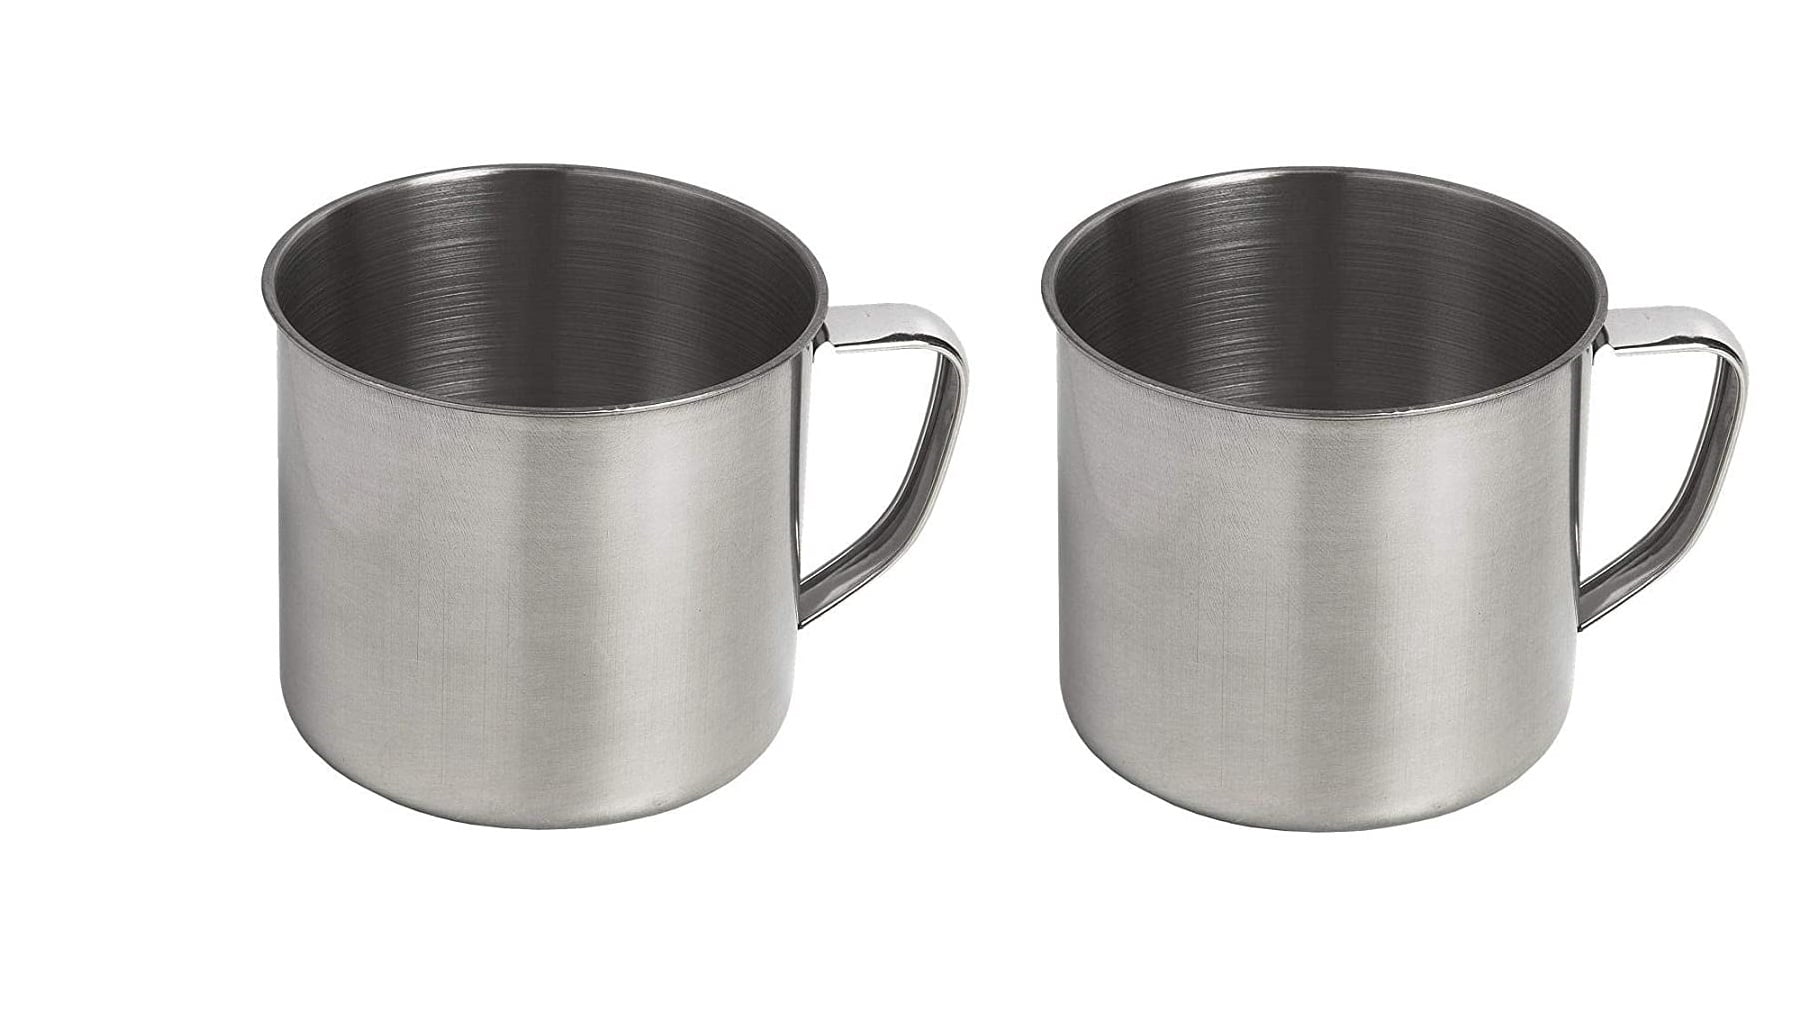 BGOO New 6pcs Stainless Steel Cup Drinking Coffee Tea Tumbler Camping Mug